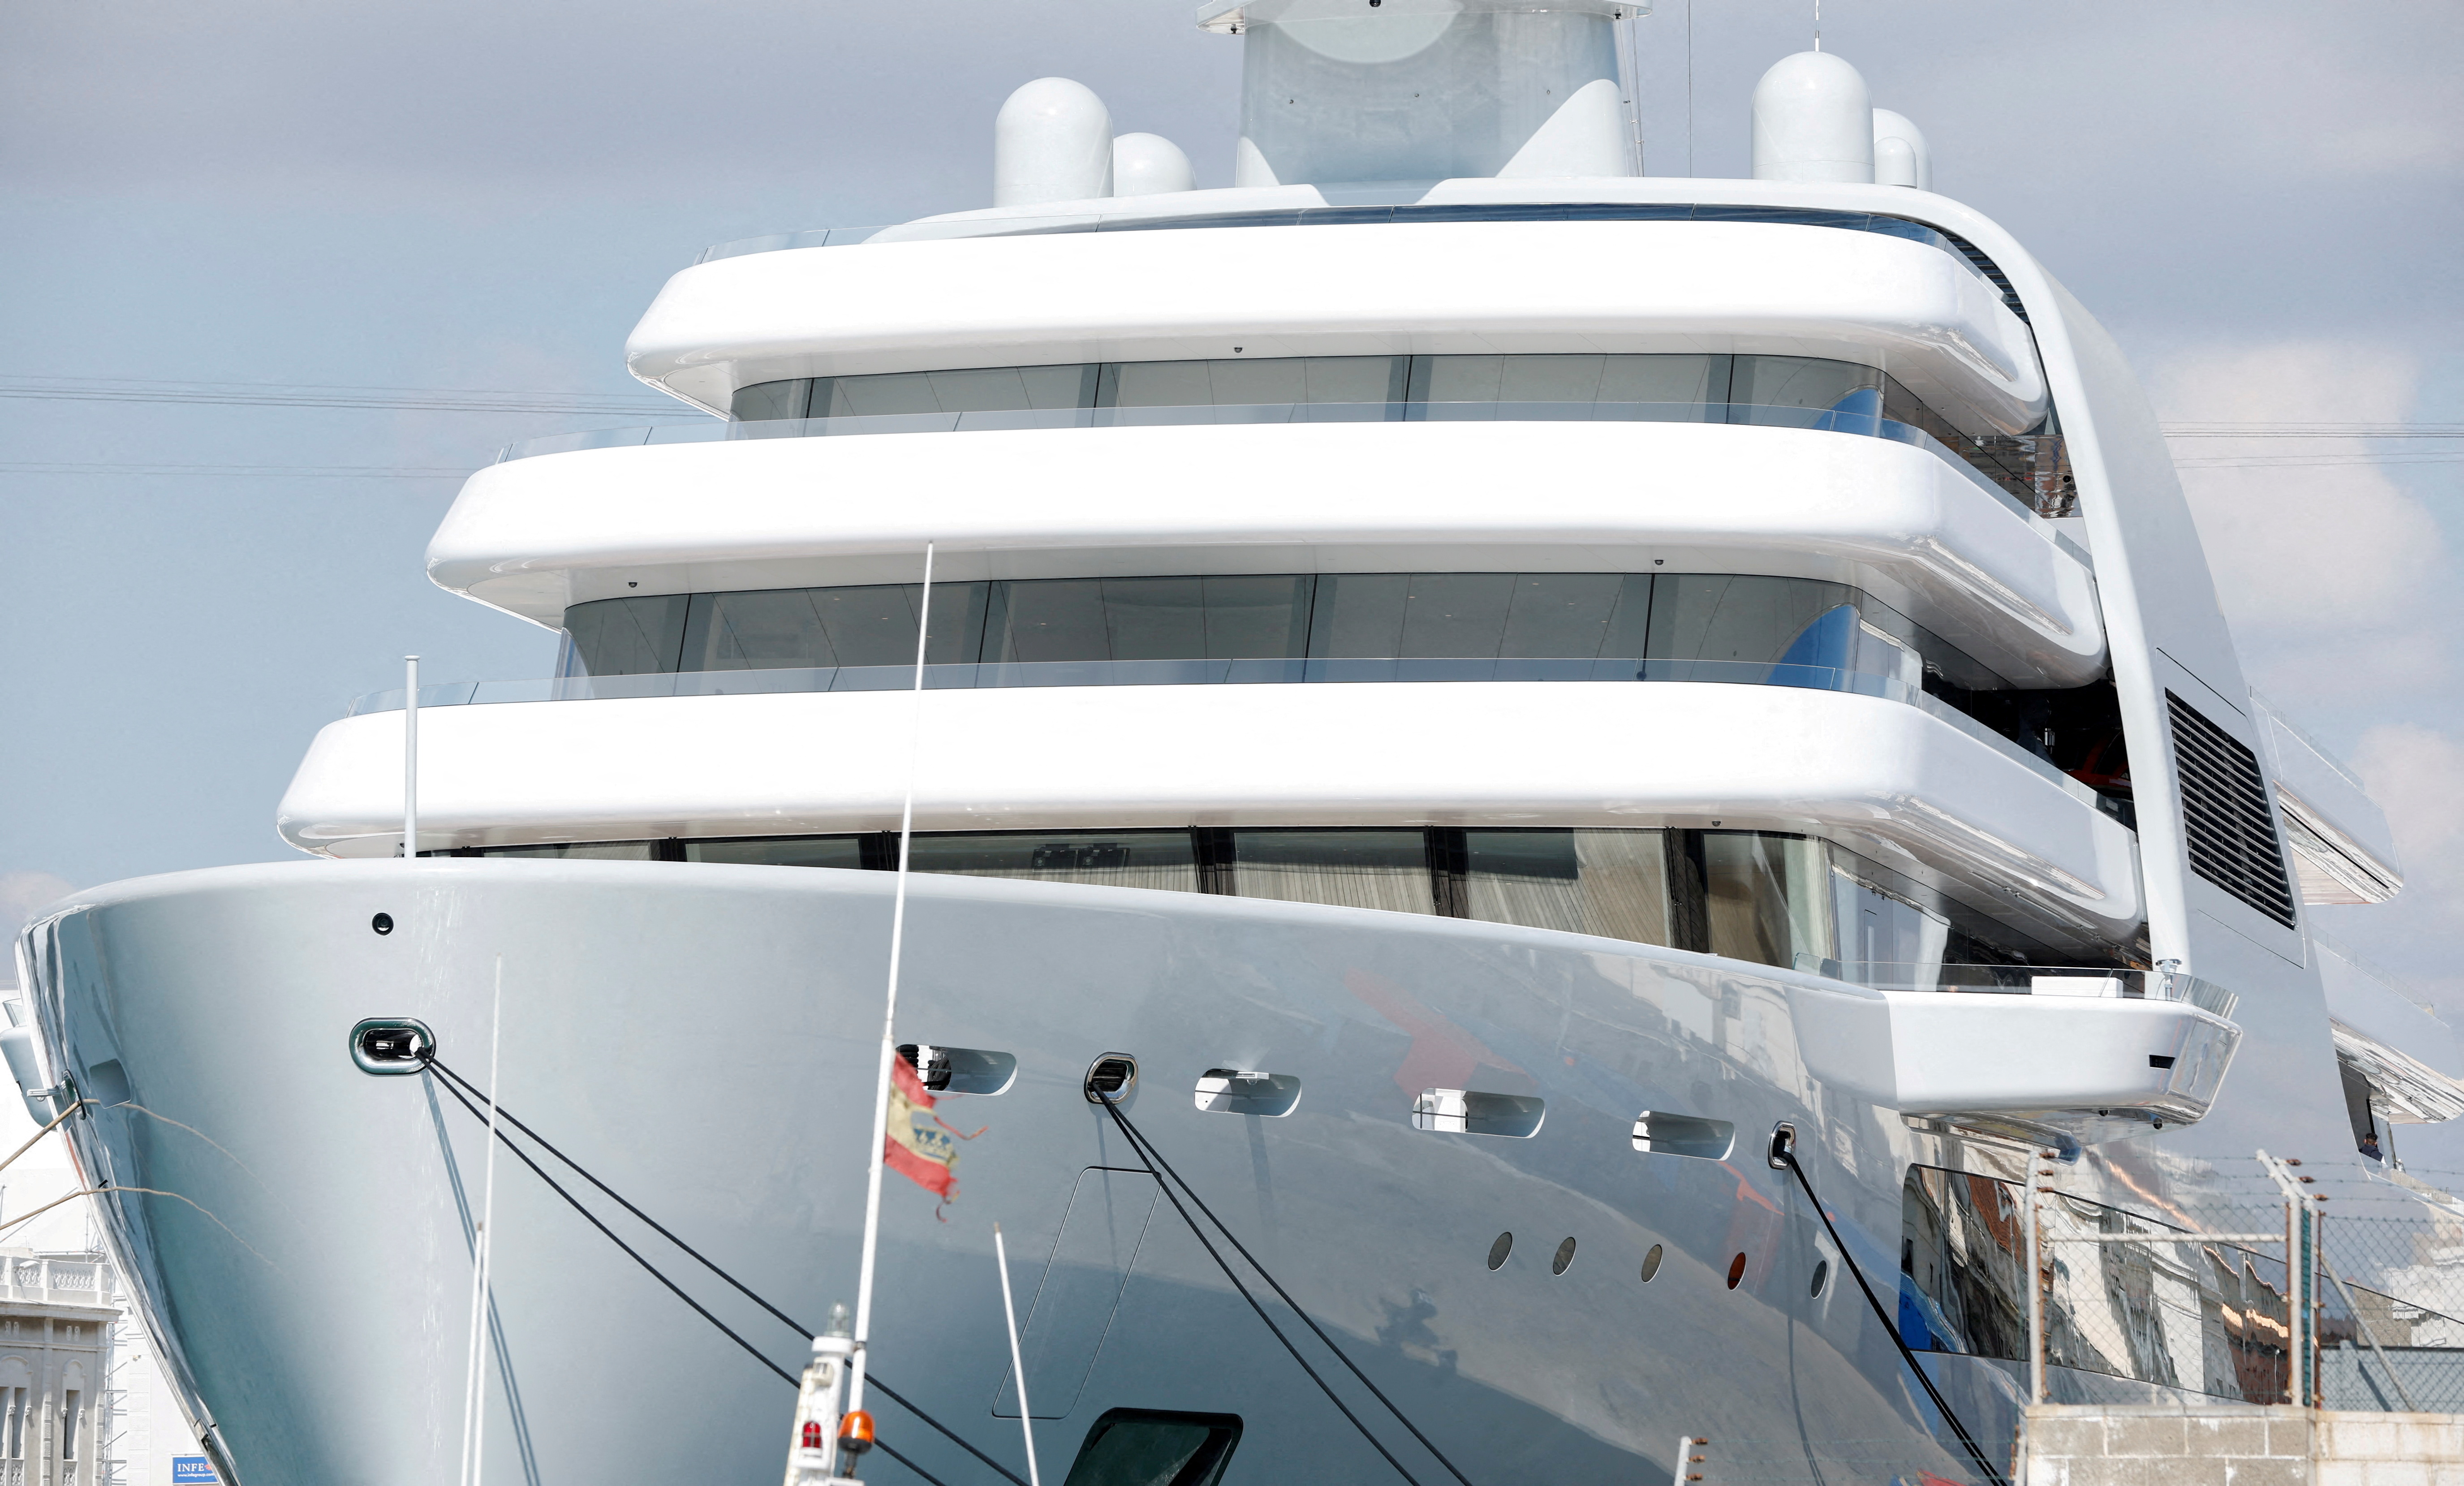 Roman Abramovich's super yacht Solaris is seen at Barcelona Port